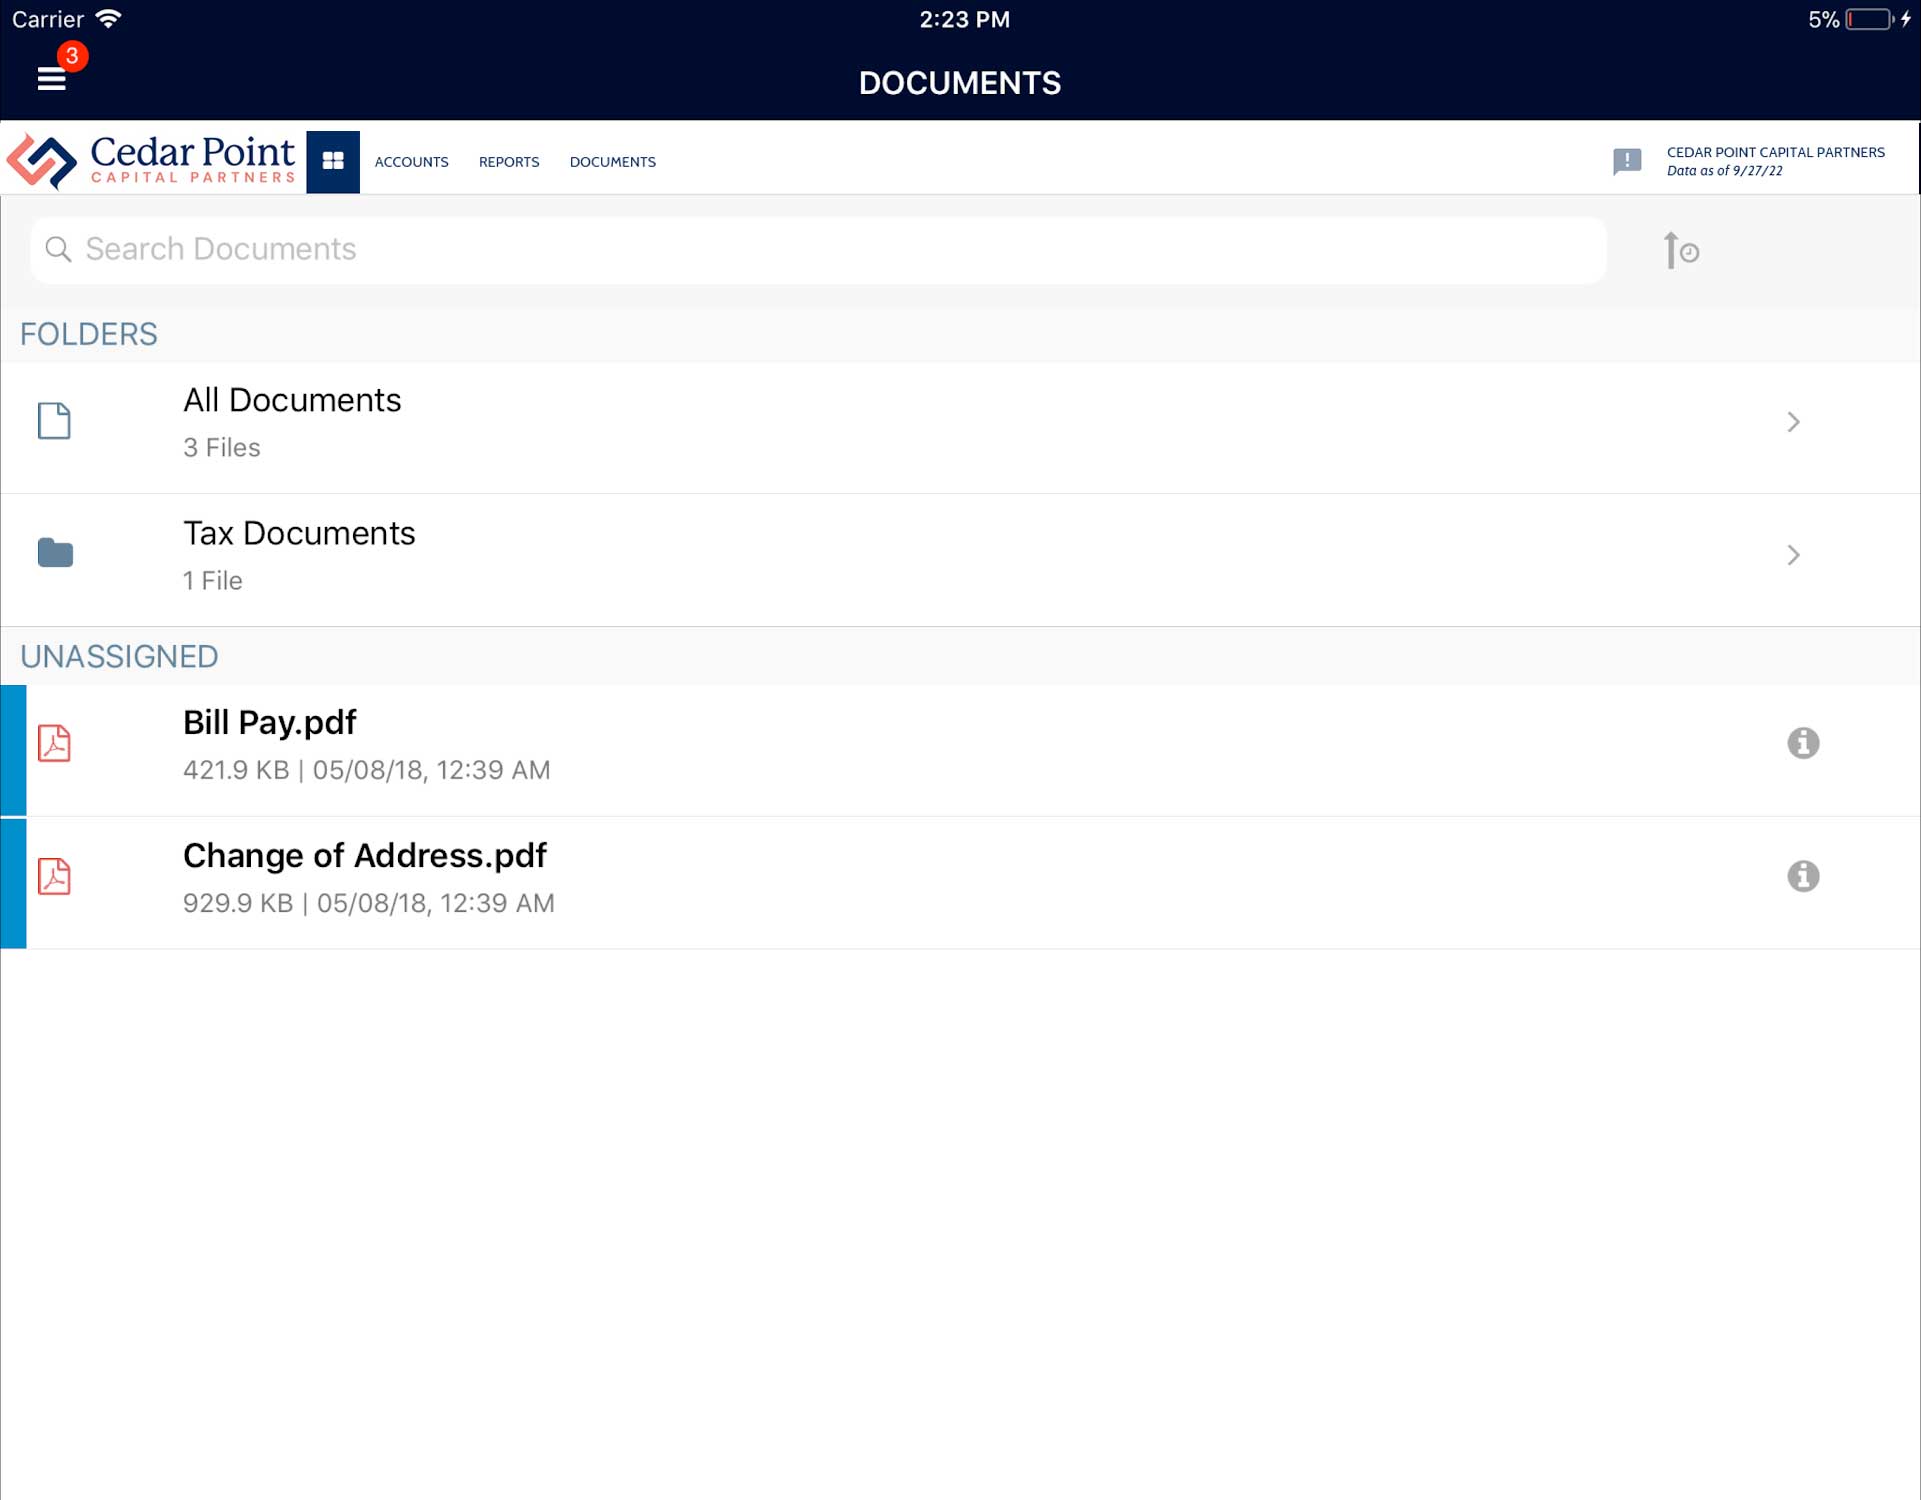 The Document Vault feature of the Cedar Point Capital Partners app